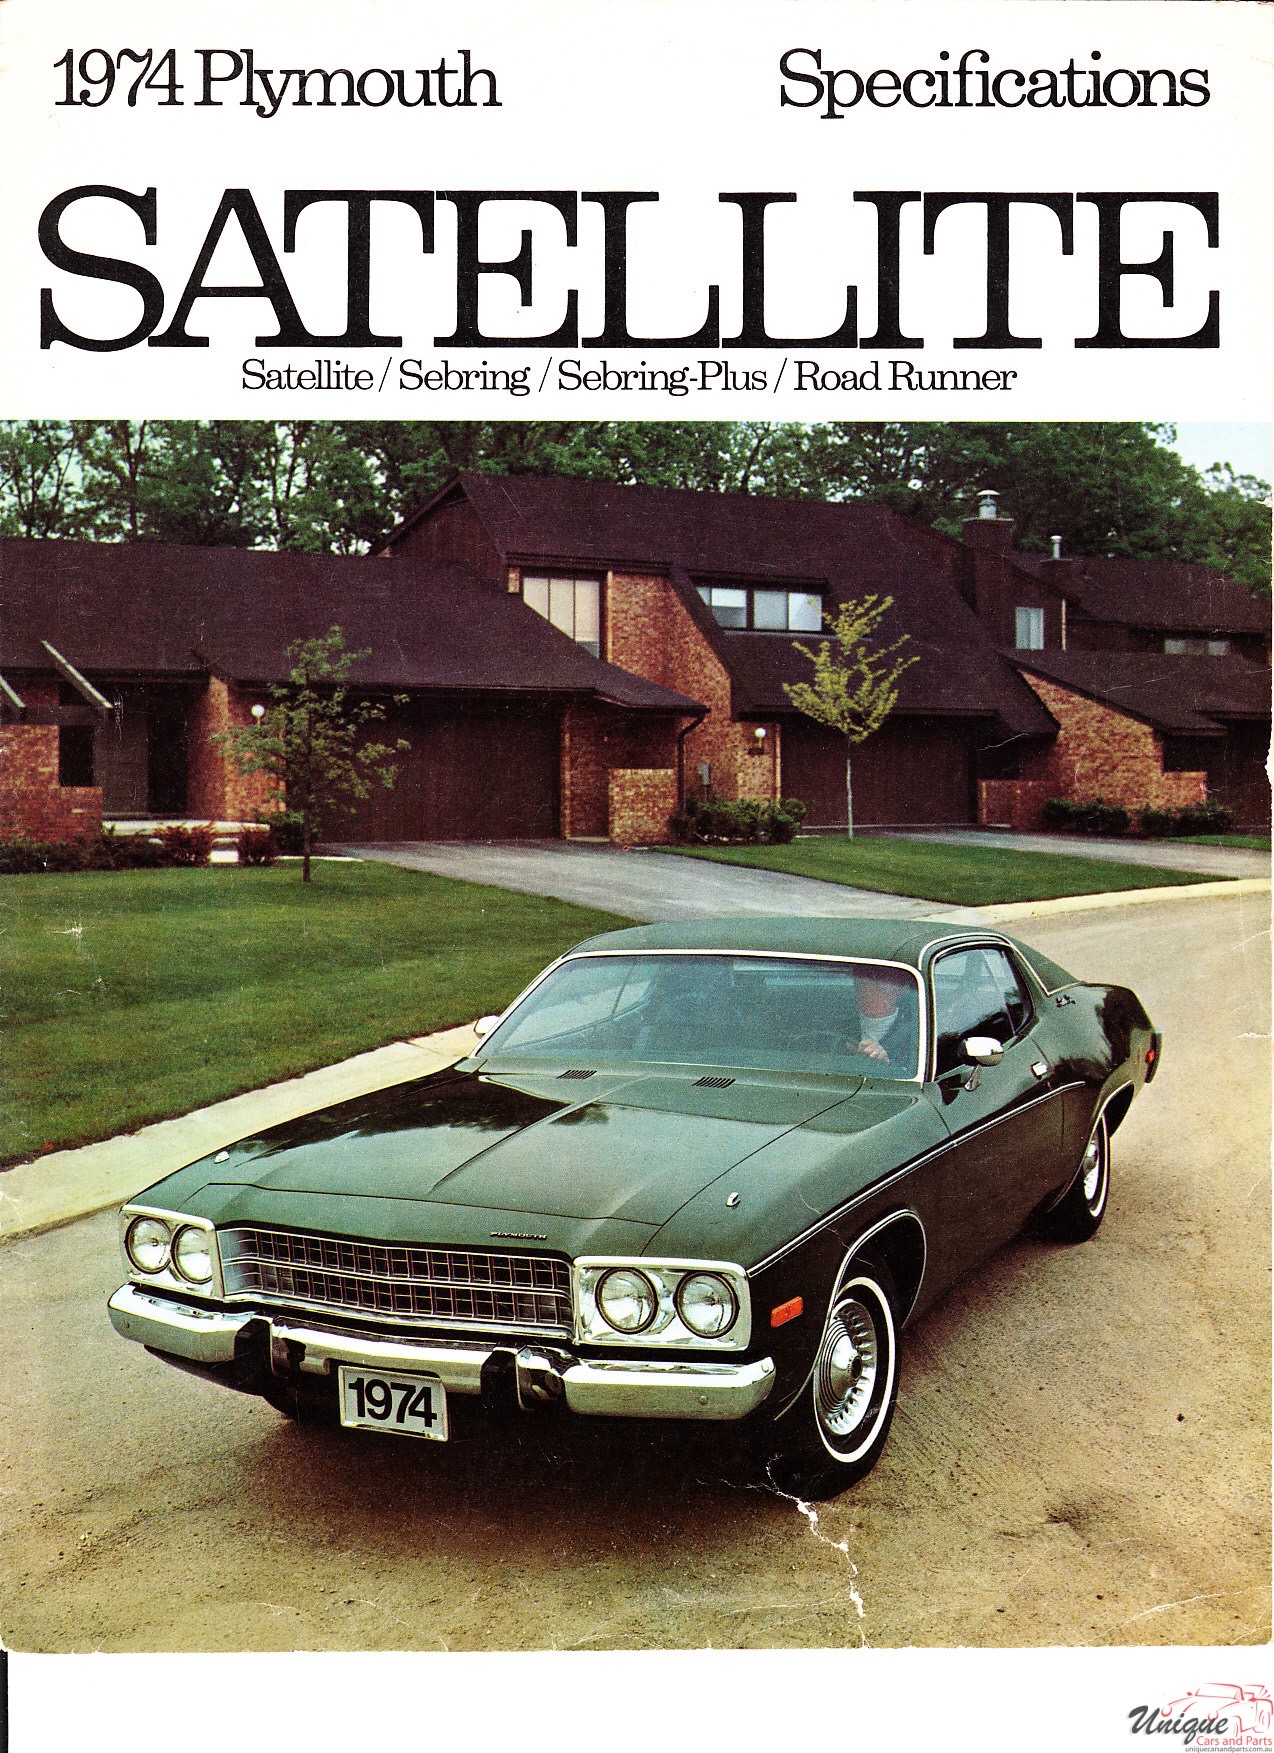 1974 Plymouth Satellite Folder Page 2